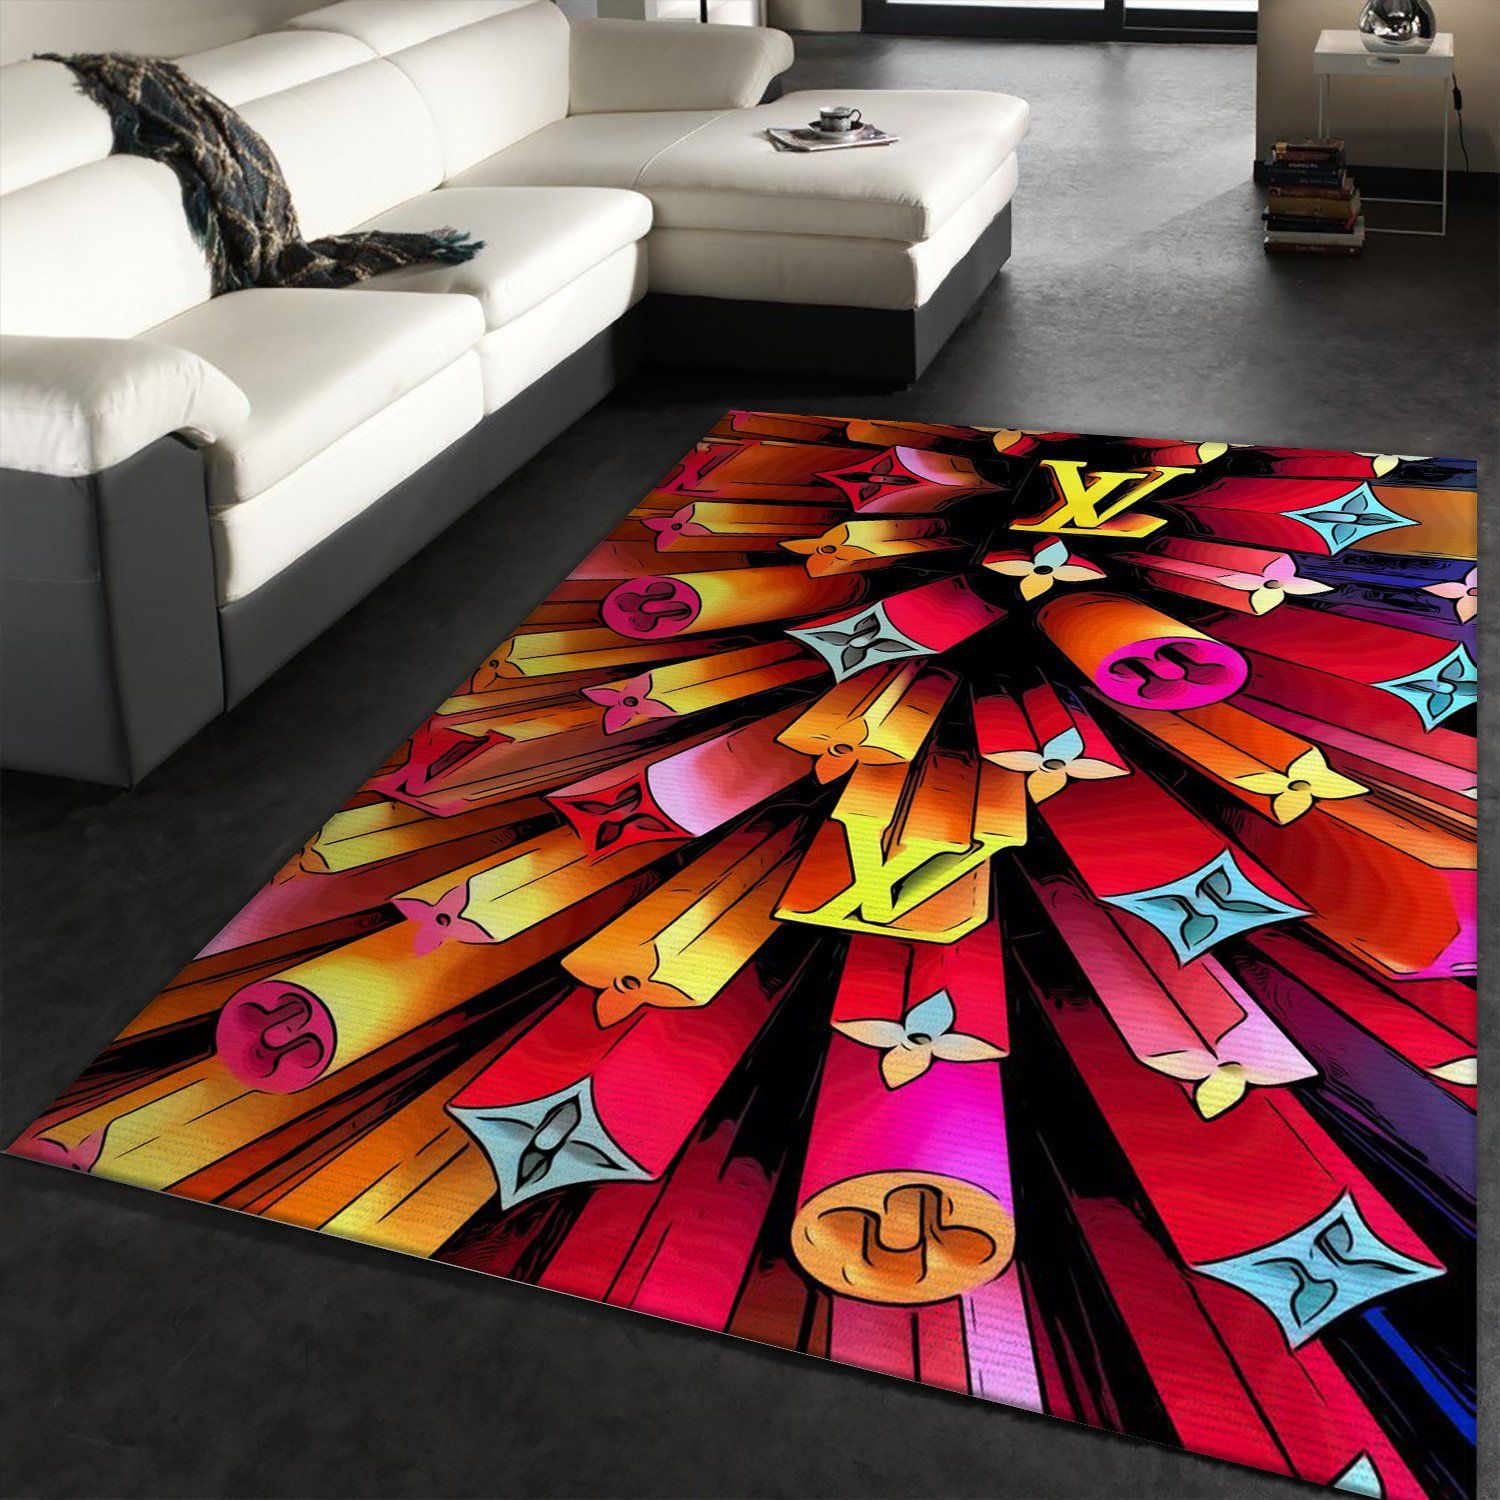 lv pink Living room carpet rugs - Travels in Translation